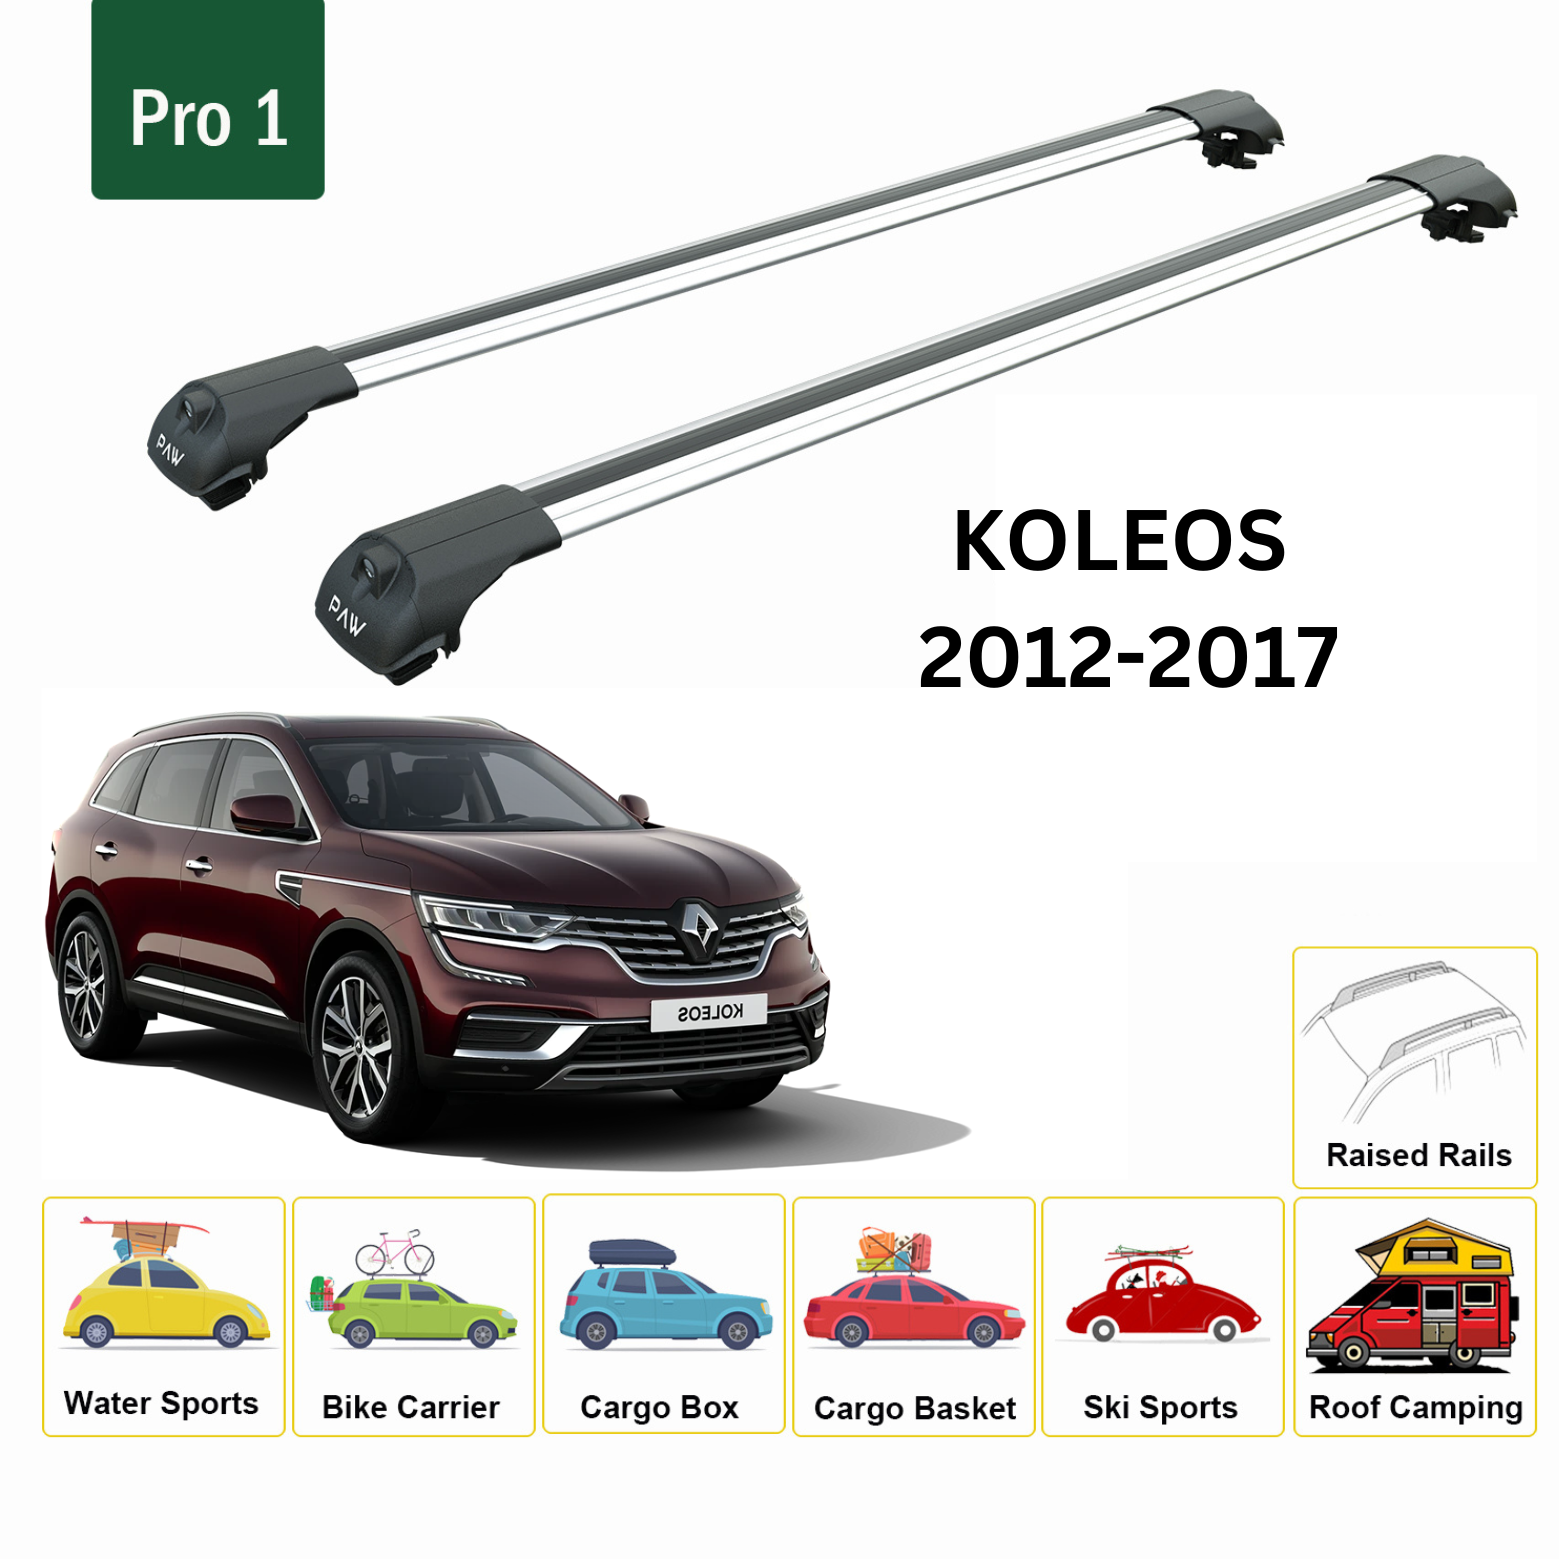 For Renault Koleos 2012-2017 Roof Rack System, Aluminium Cross Bar, Metal Bracket, Normal Roof, Silver - 0